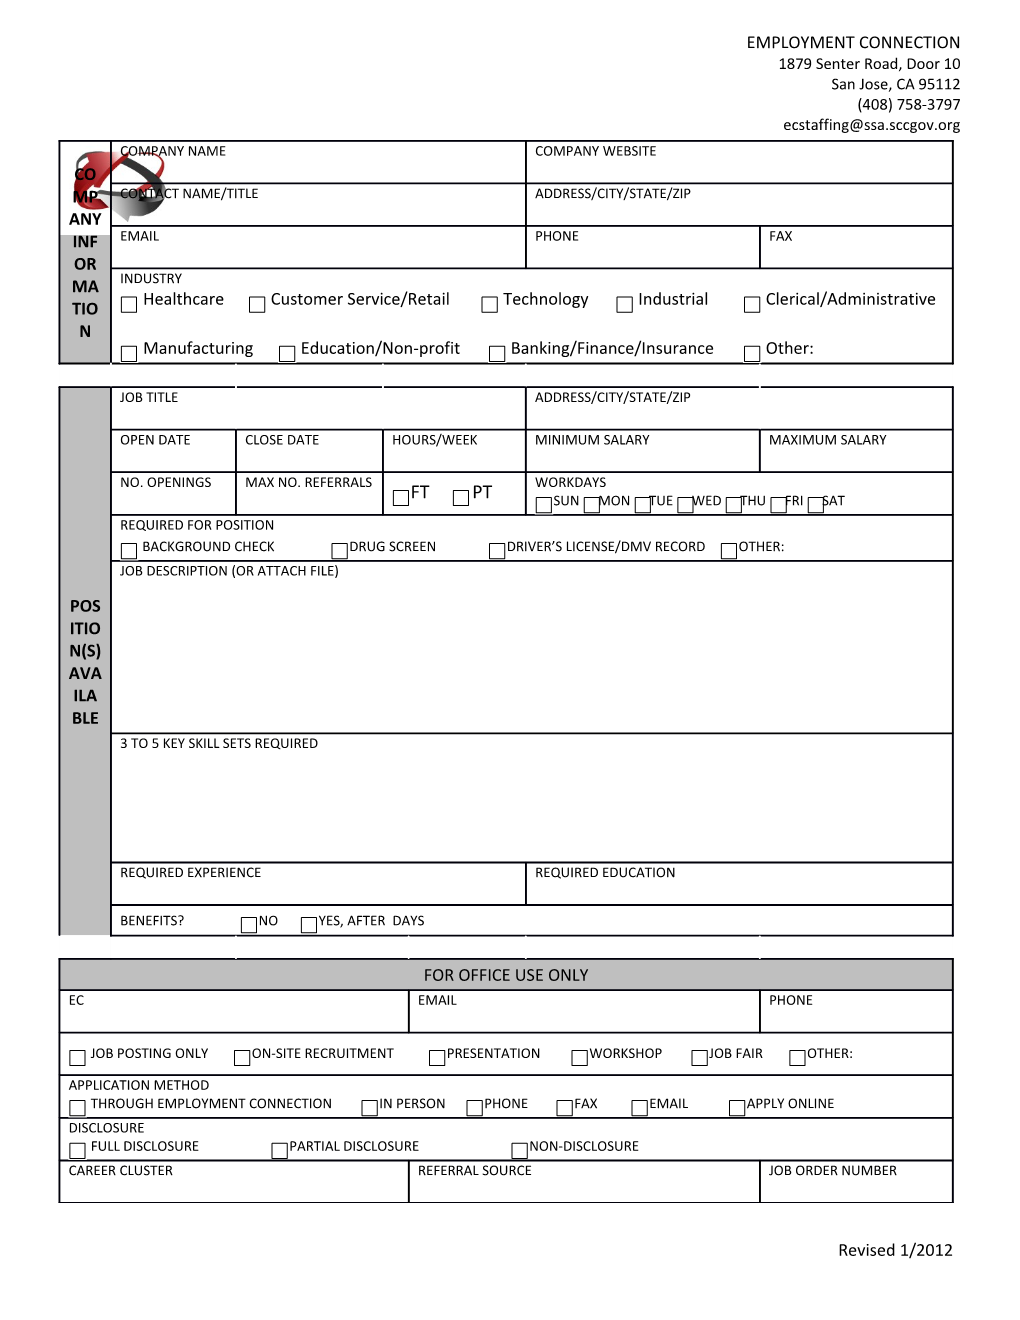 SCC Employment Connection Job Order Form